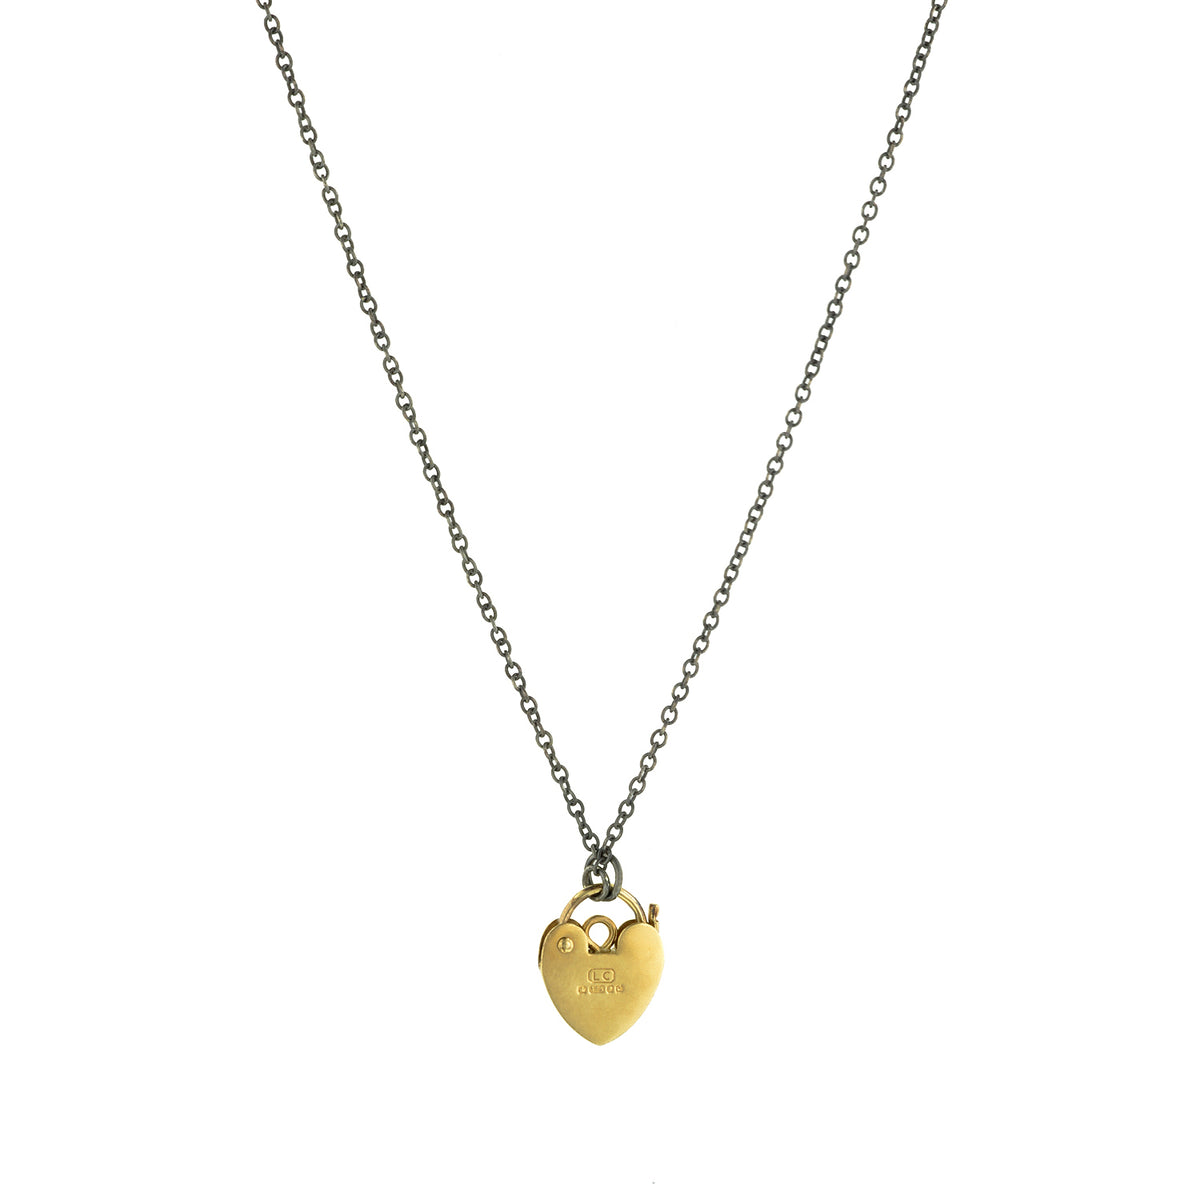 Vintage Heart Padlock Necklace